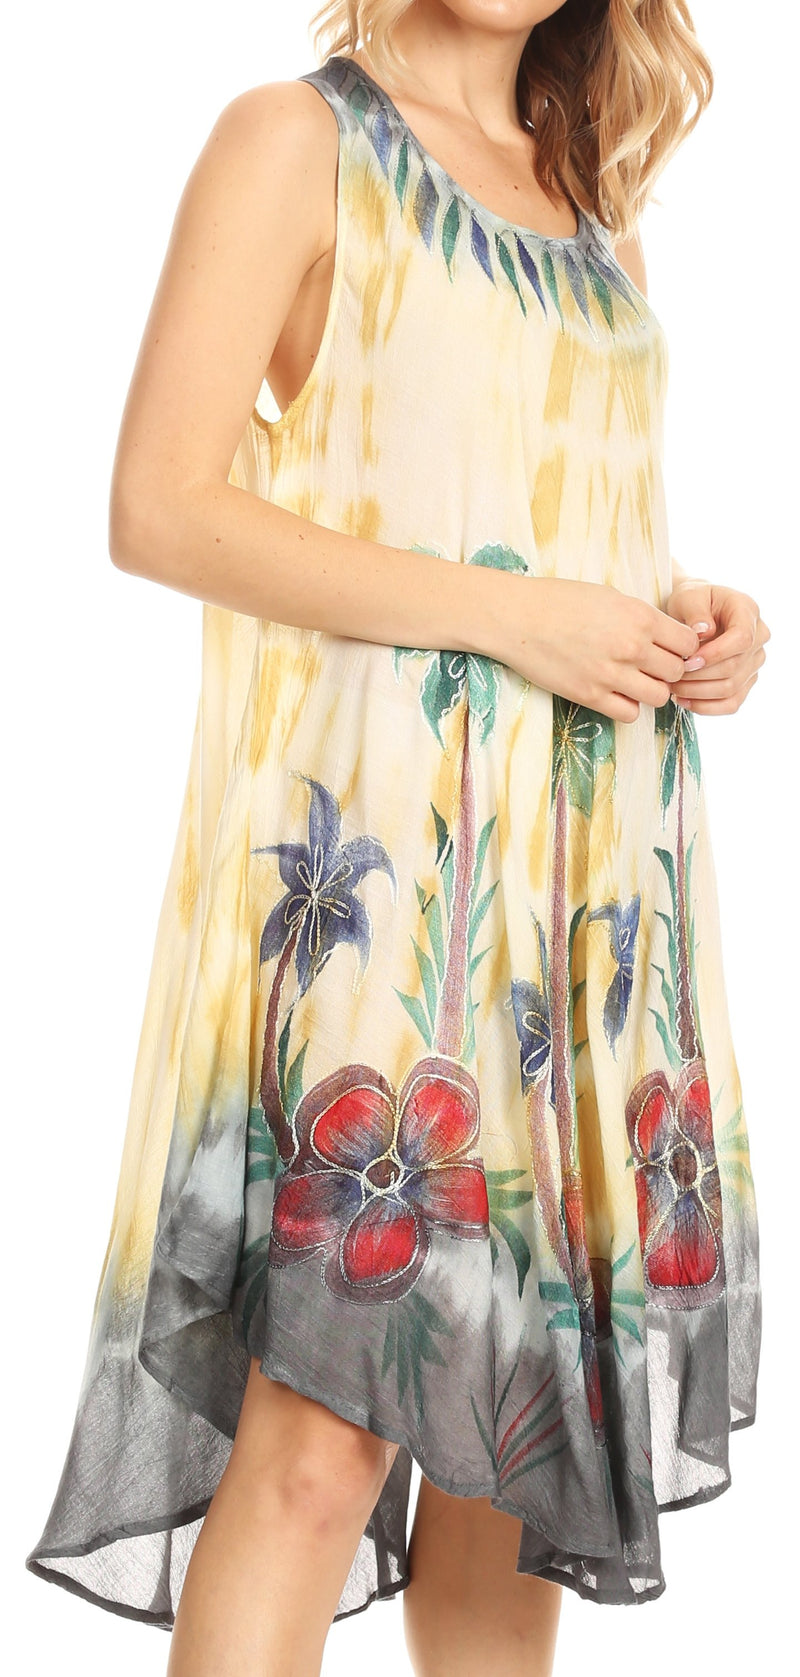 Sakkas Jimena Women's Tie Dye Sleeveless Caftan Dress Sundress Flare Floral Print